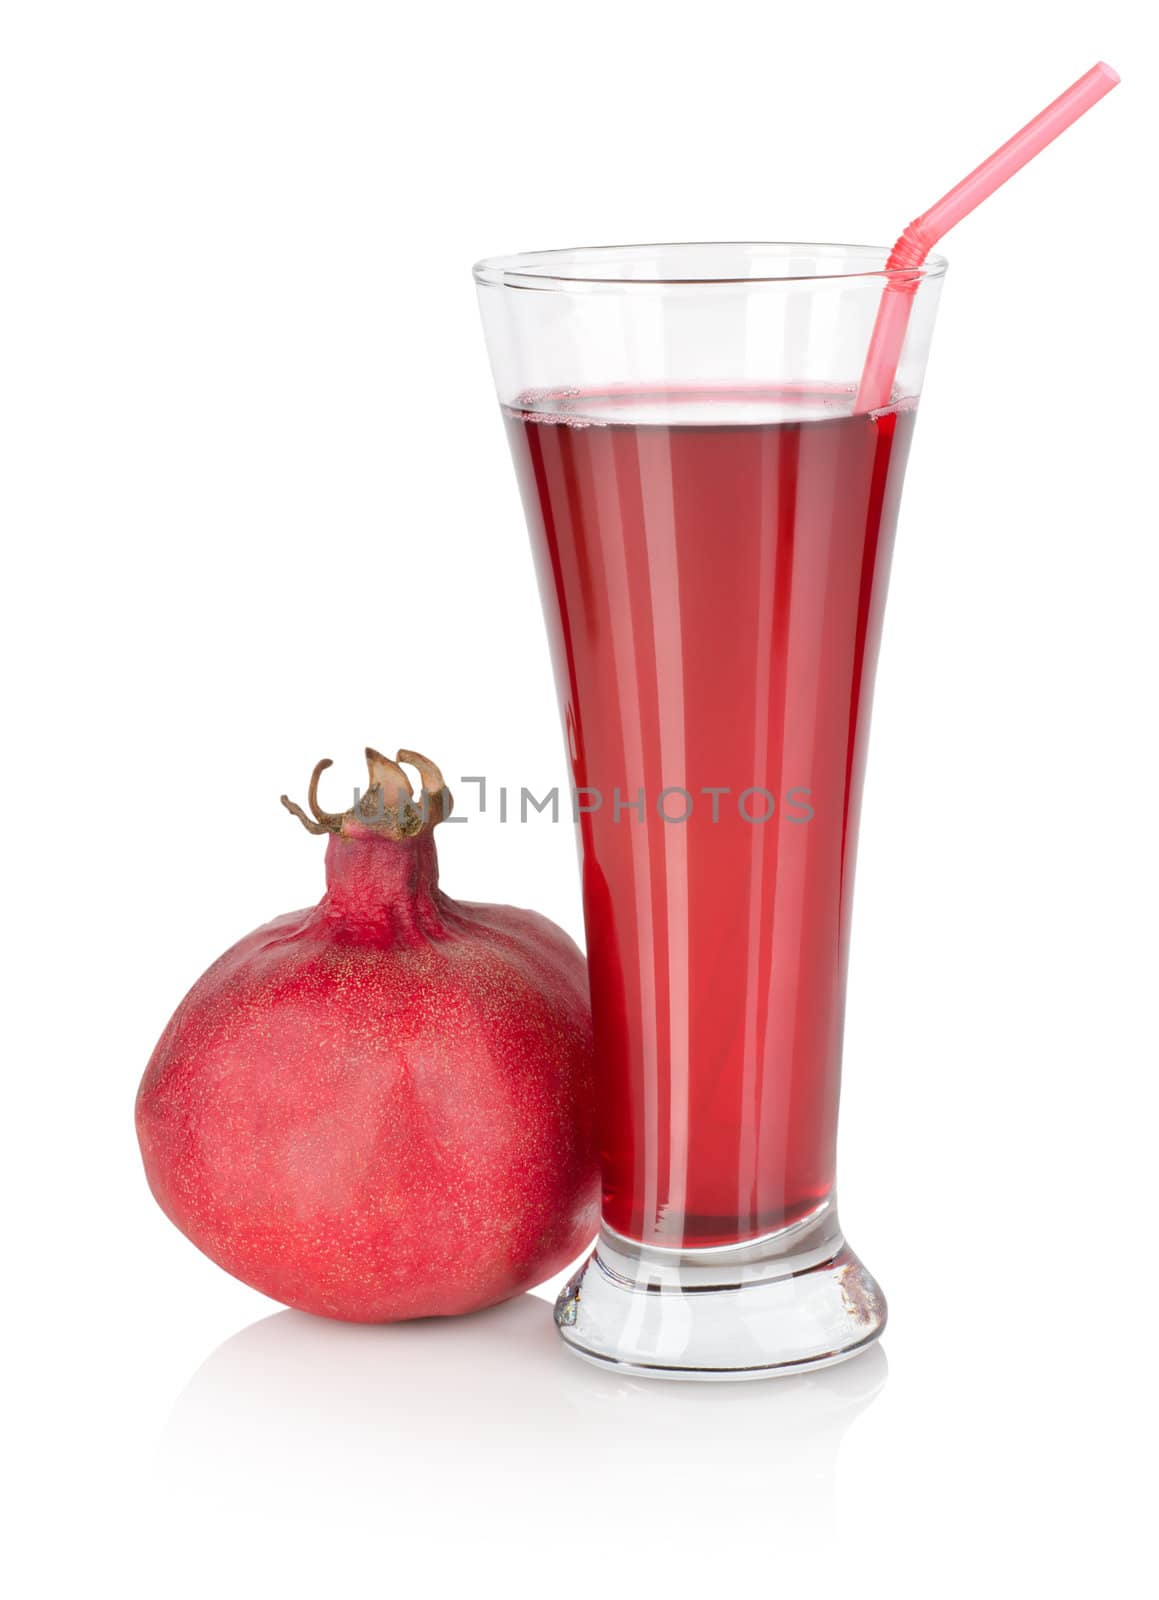 Pomegranate juice isolated on a white background